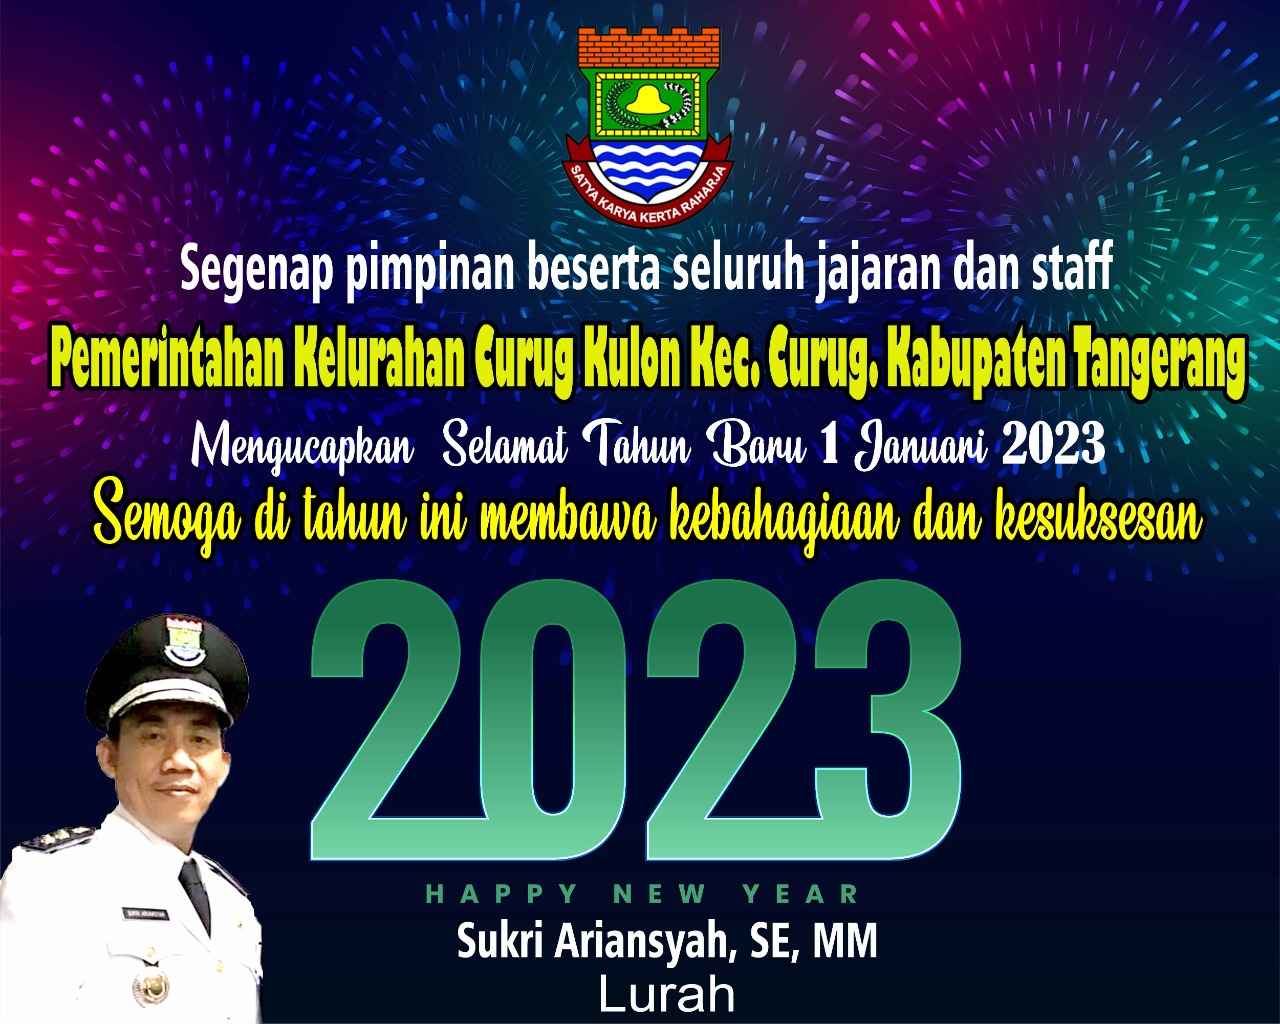 Pemerintahan Kelurahan Curug Kulon, Kecamatan Curug, Kabupaten Tangerang Mengucapkan Selamat Tahun Baru 1 Januari 2023